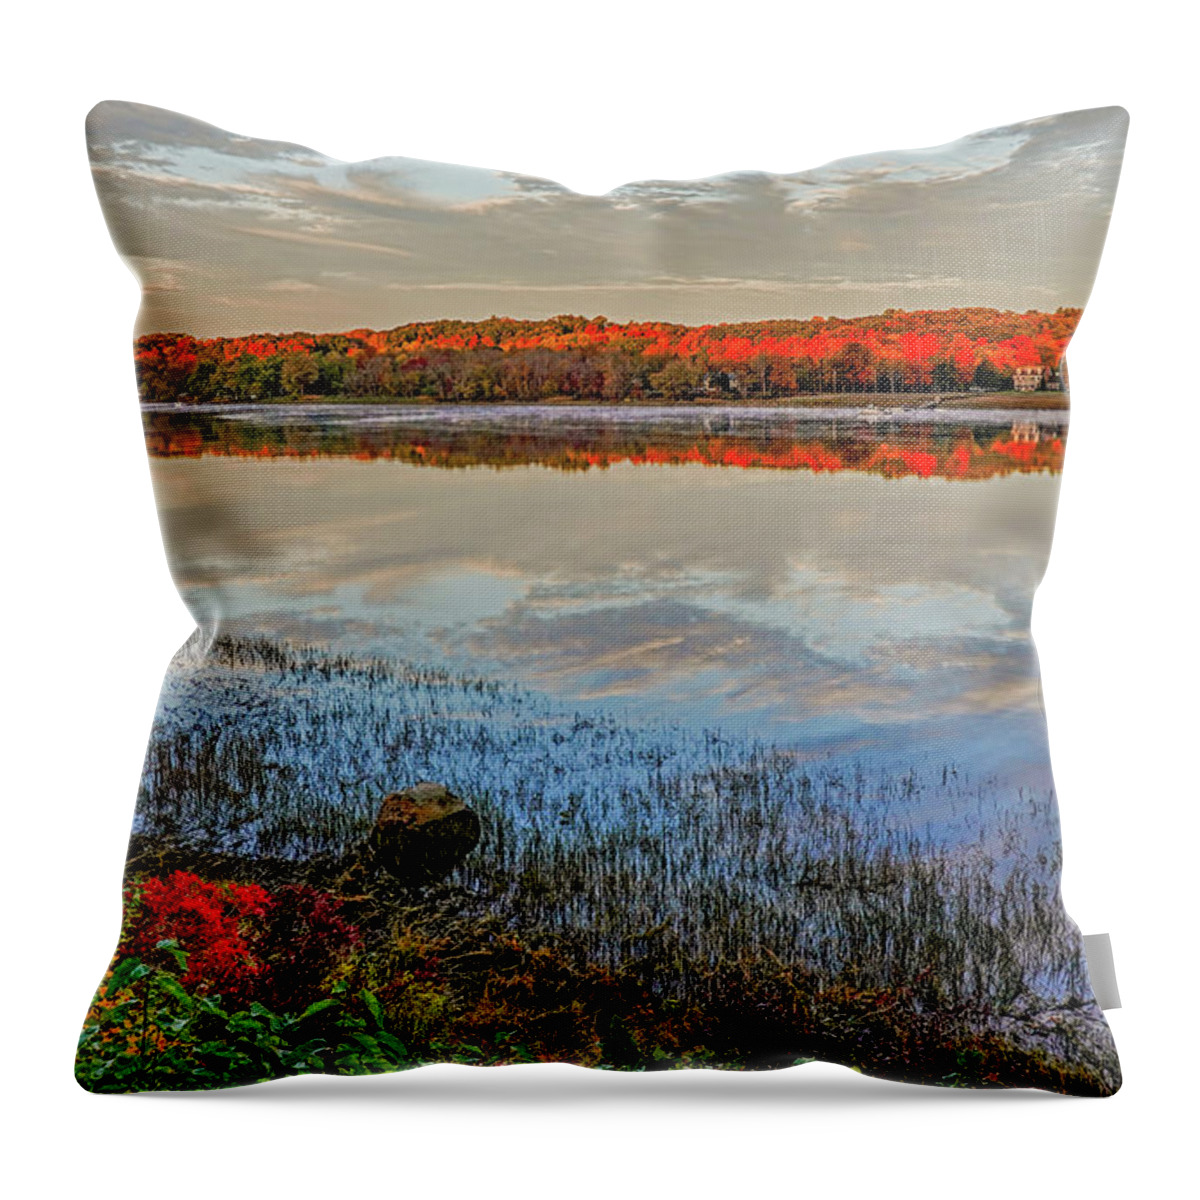 Newburyport Throw Pillow featuring the photograph Newburyport MA Maudslay State Park Fall Foliage Sunrise Merrimack River Reflection by Toby McGuire